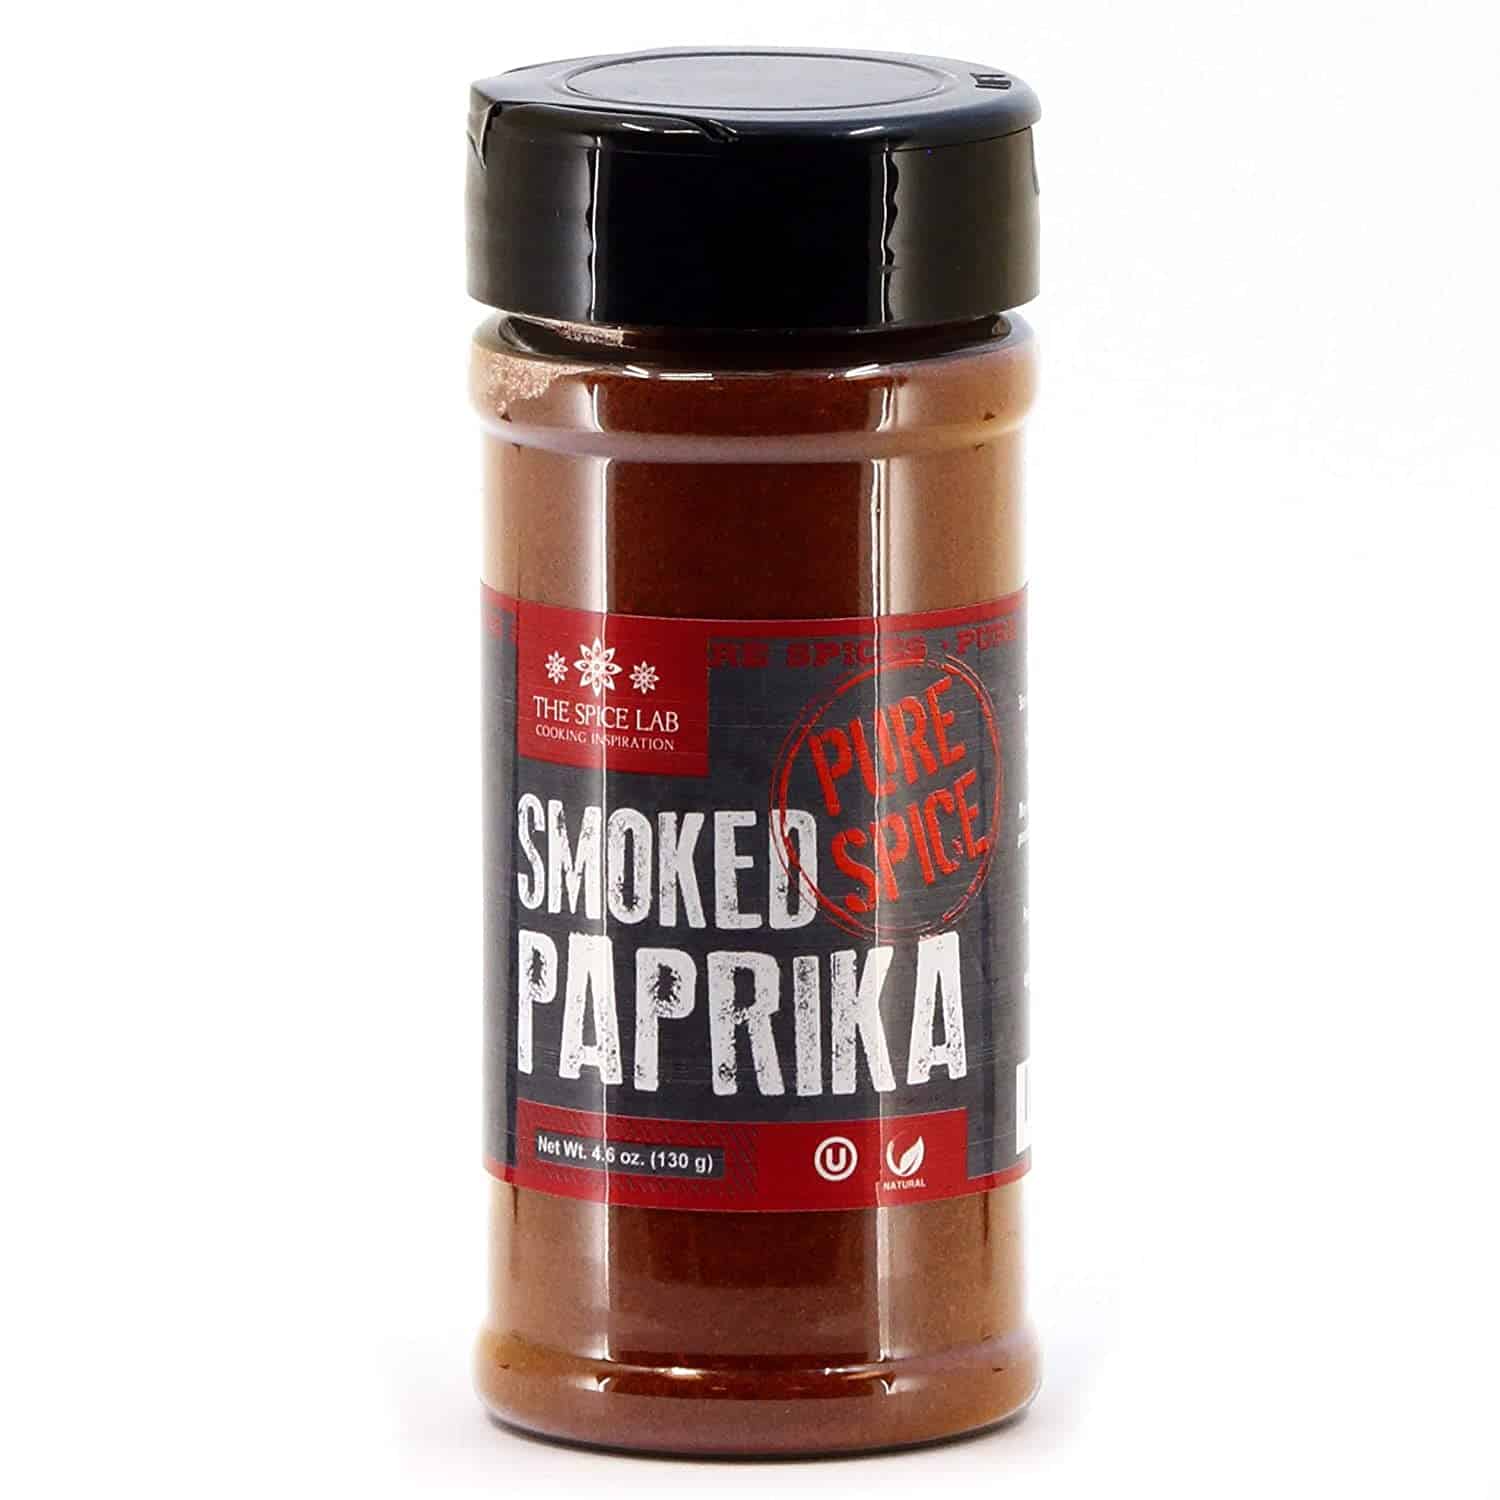 Smoked paprika as a good substitute to annatto powder